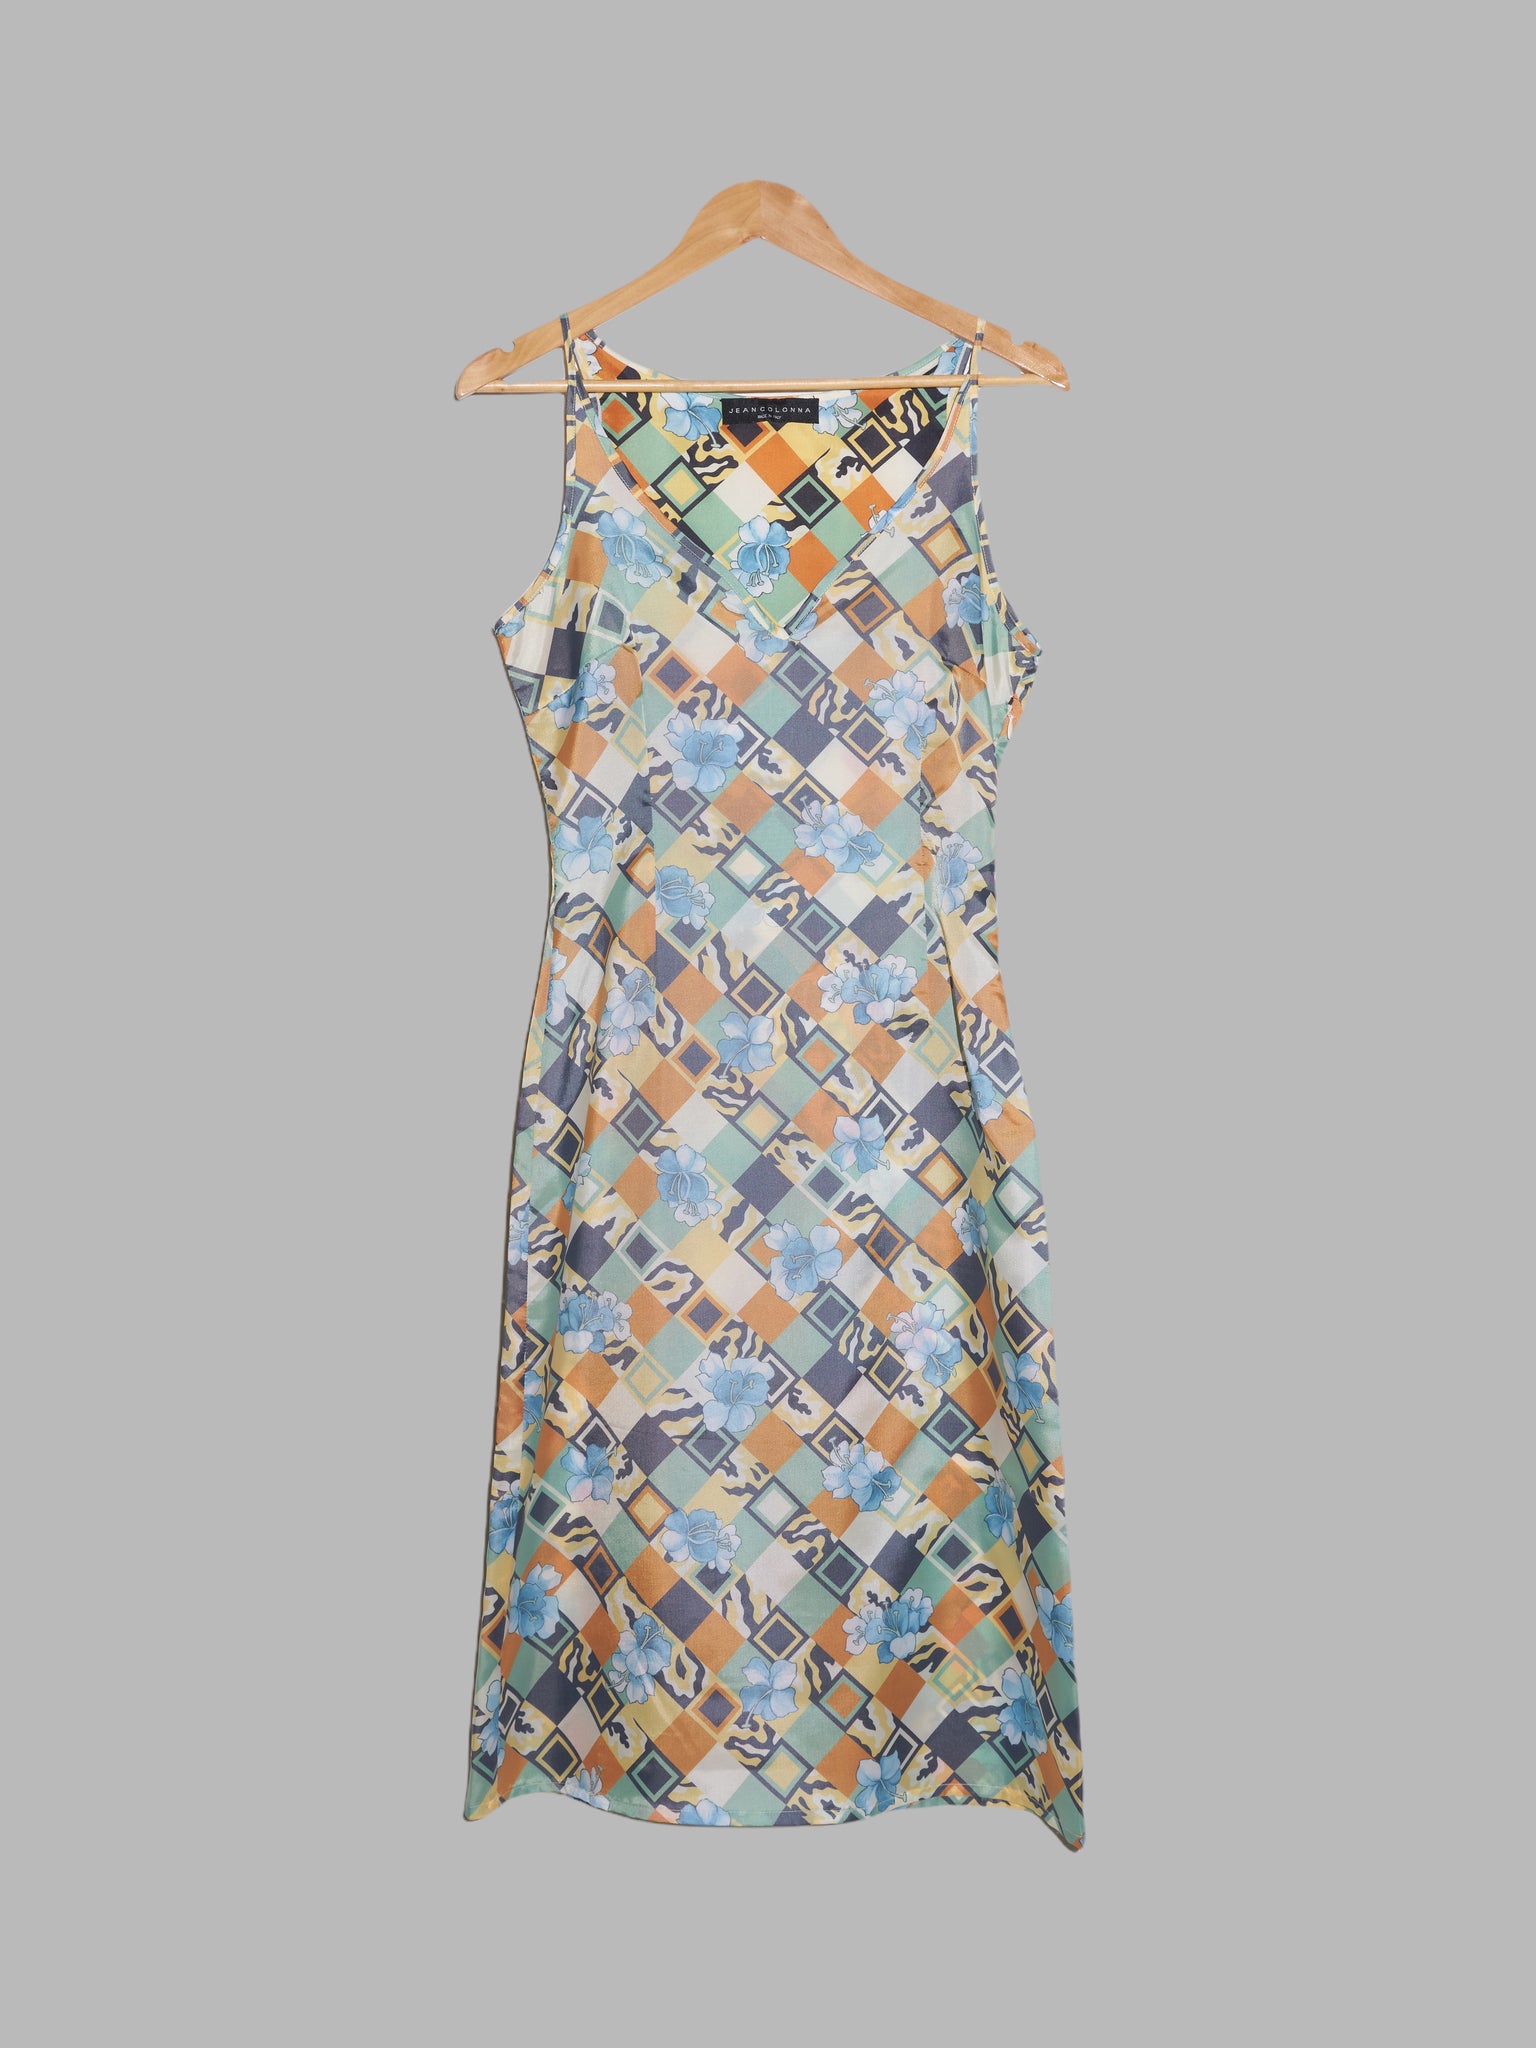 Jean Colonna SS1998 reversed geometric floral print satin slip dress